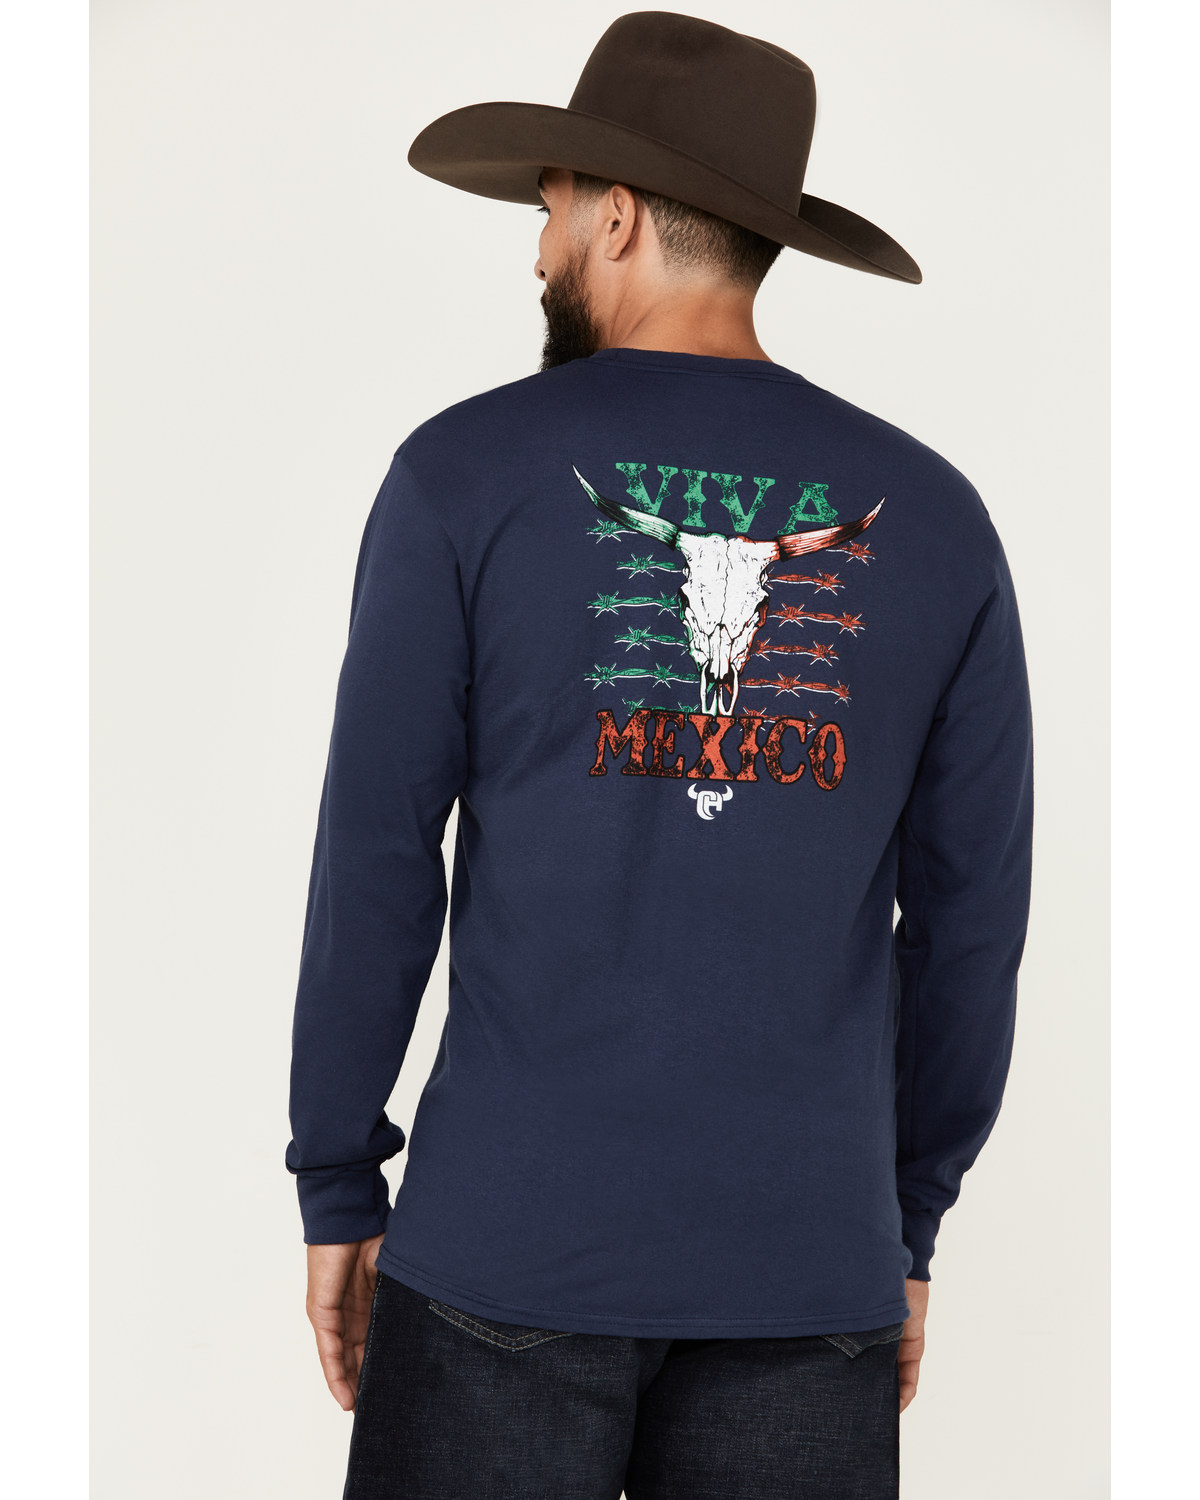 Cowboy Hardware Men's Viva Mexico Steer Head Long Sleeve Graphic Shirt